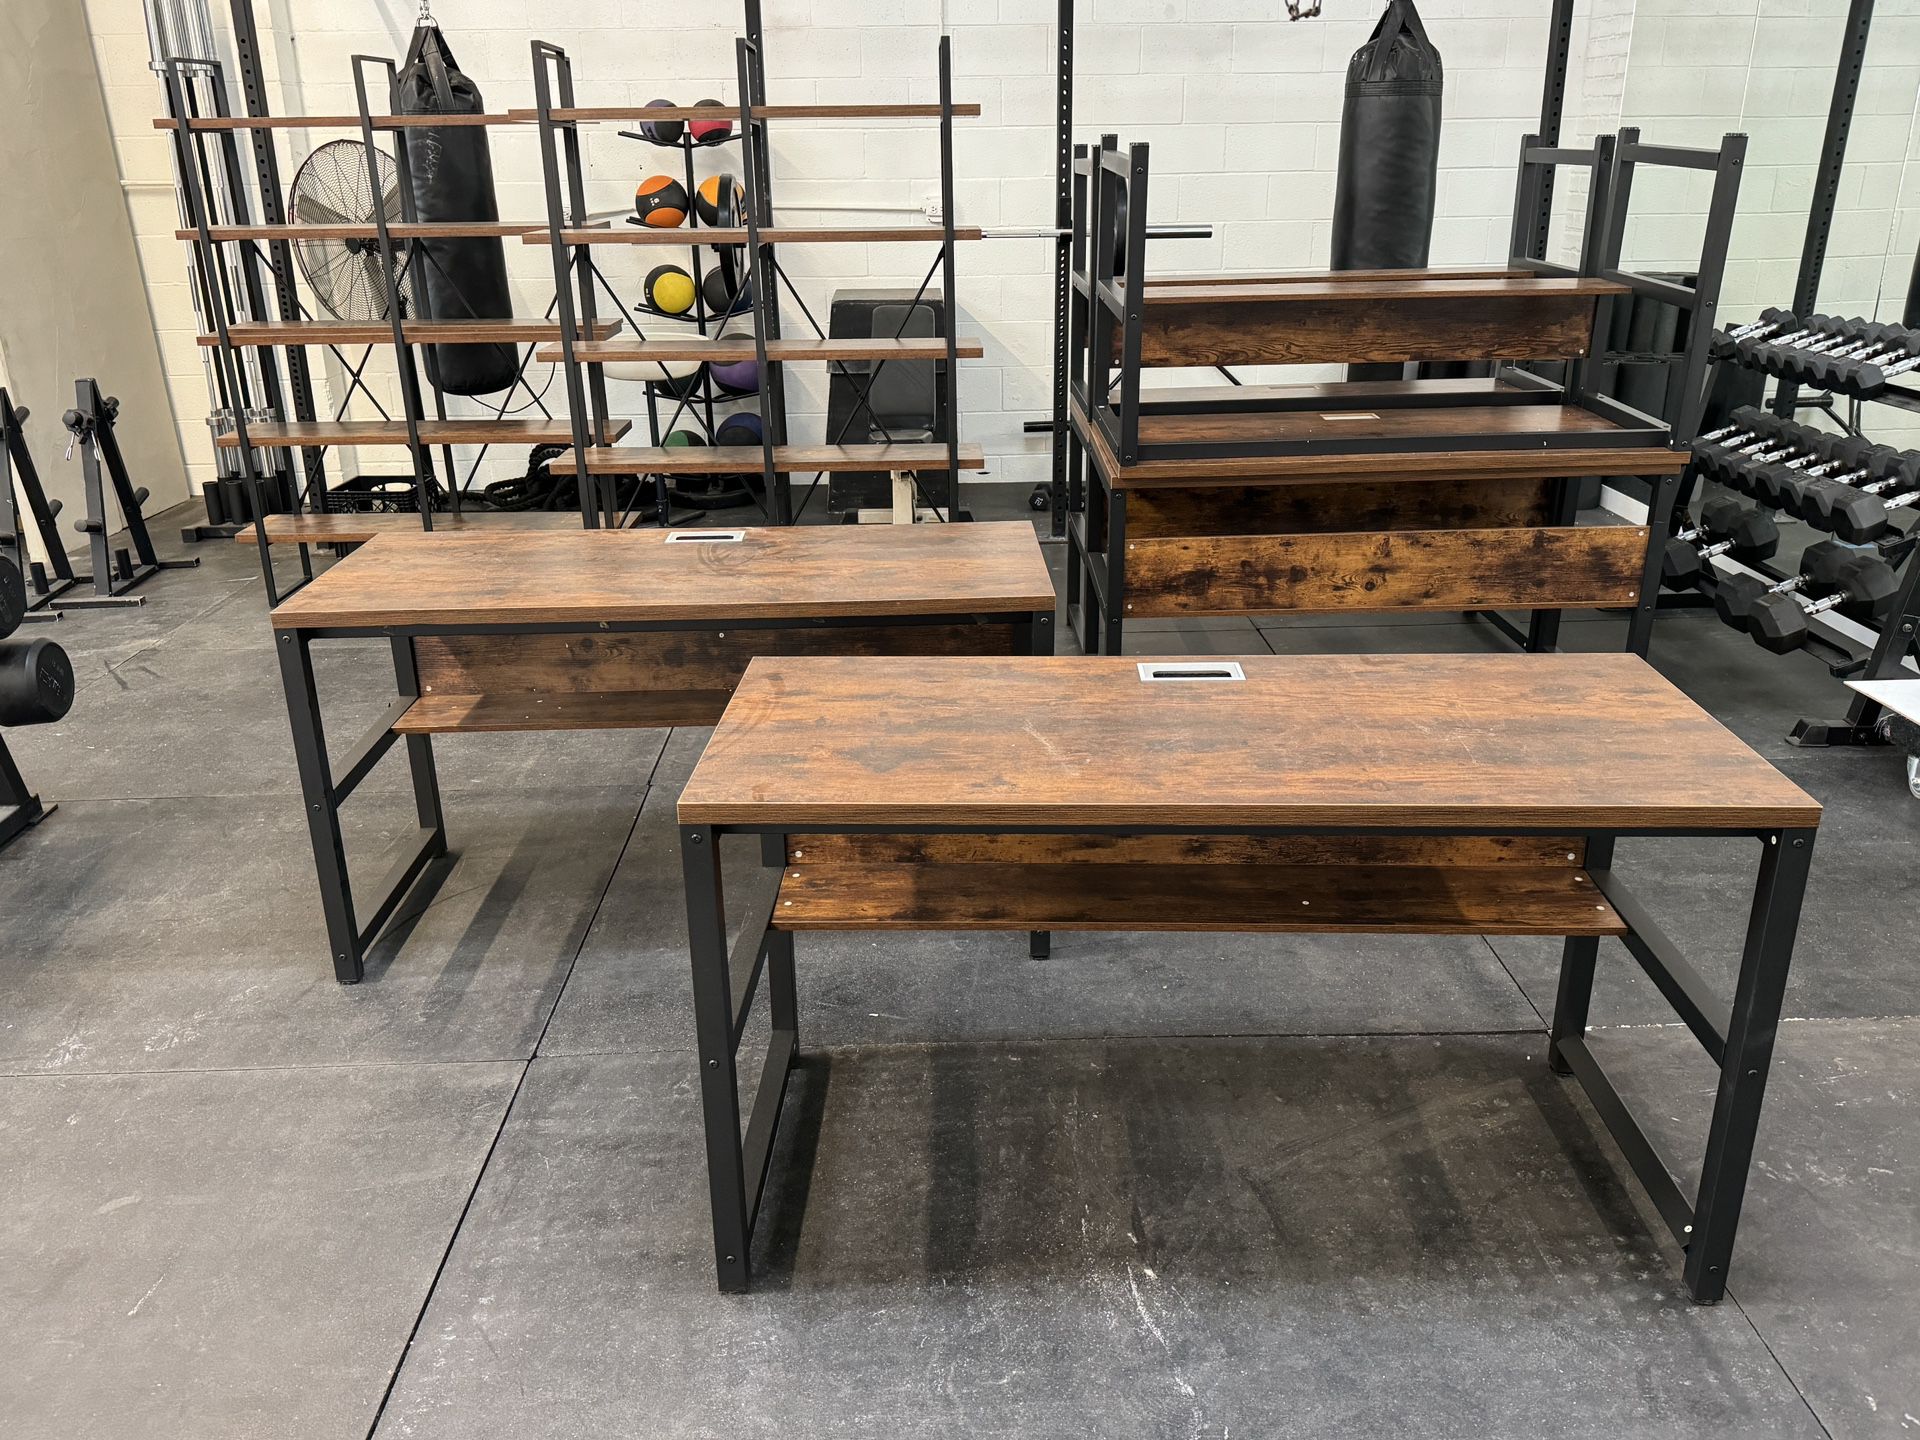 6 Rustic Wood Desks And 3 Shelving Units 